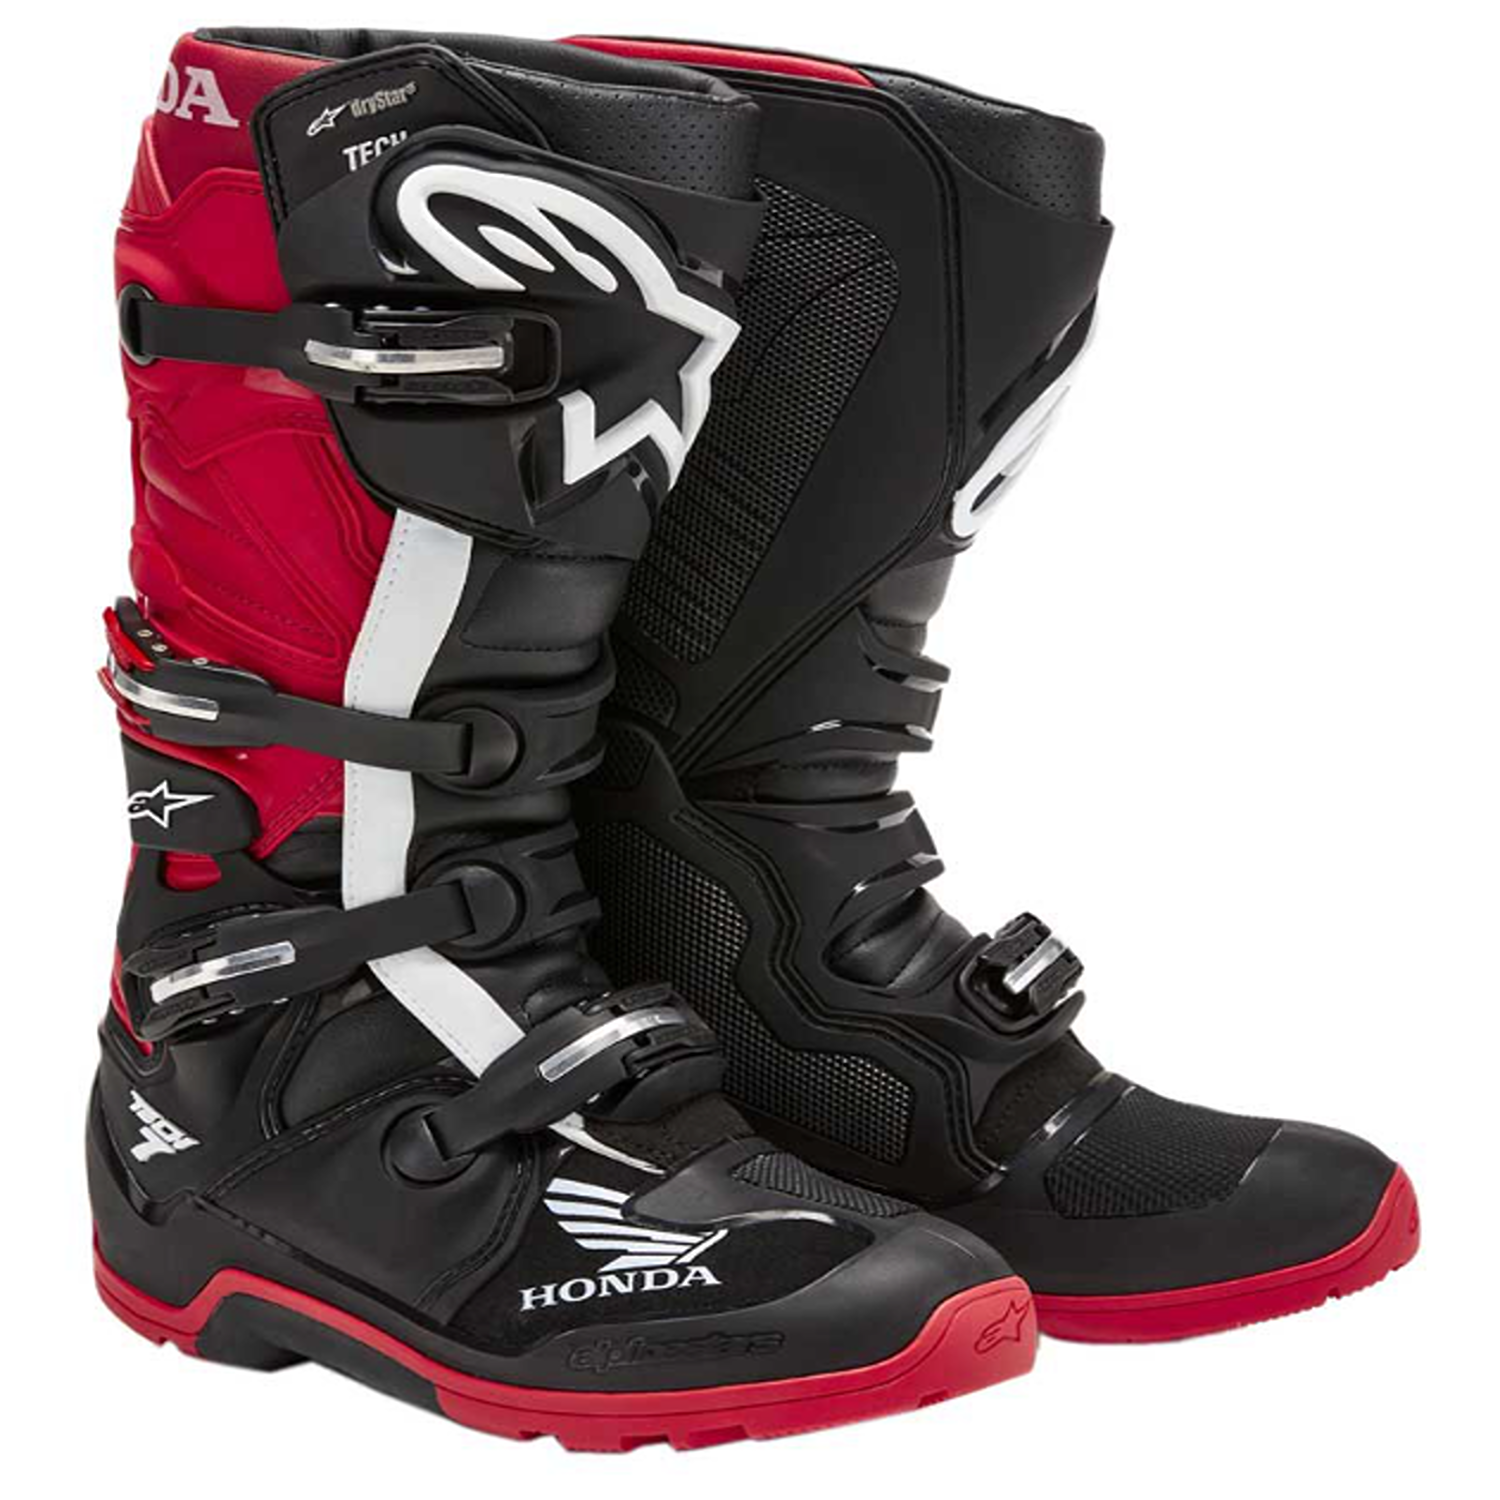 Image of Alpinestars Honda Tech 7 Enduro Drystar Boots Black Bright Red Taille US 8